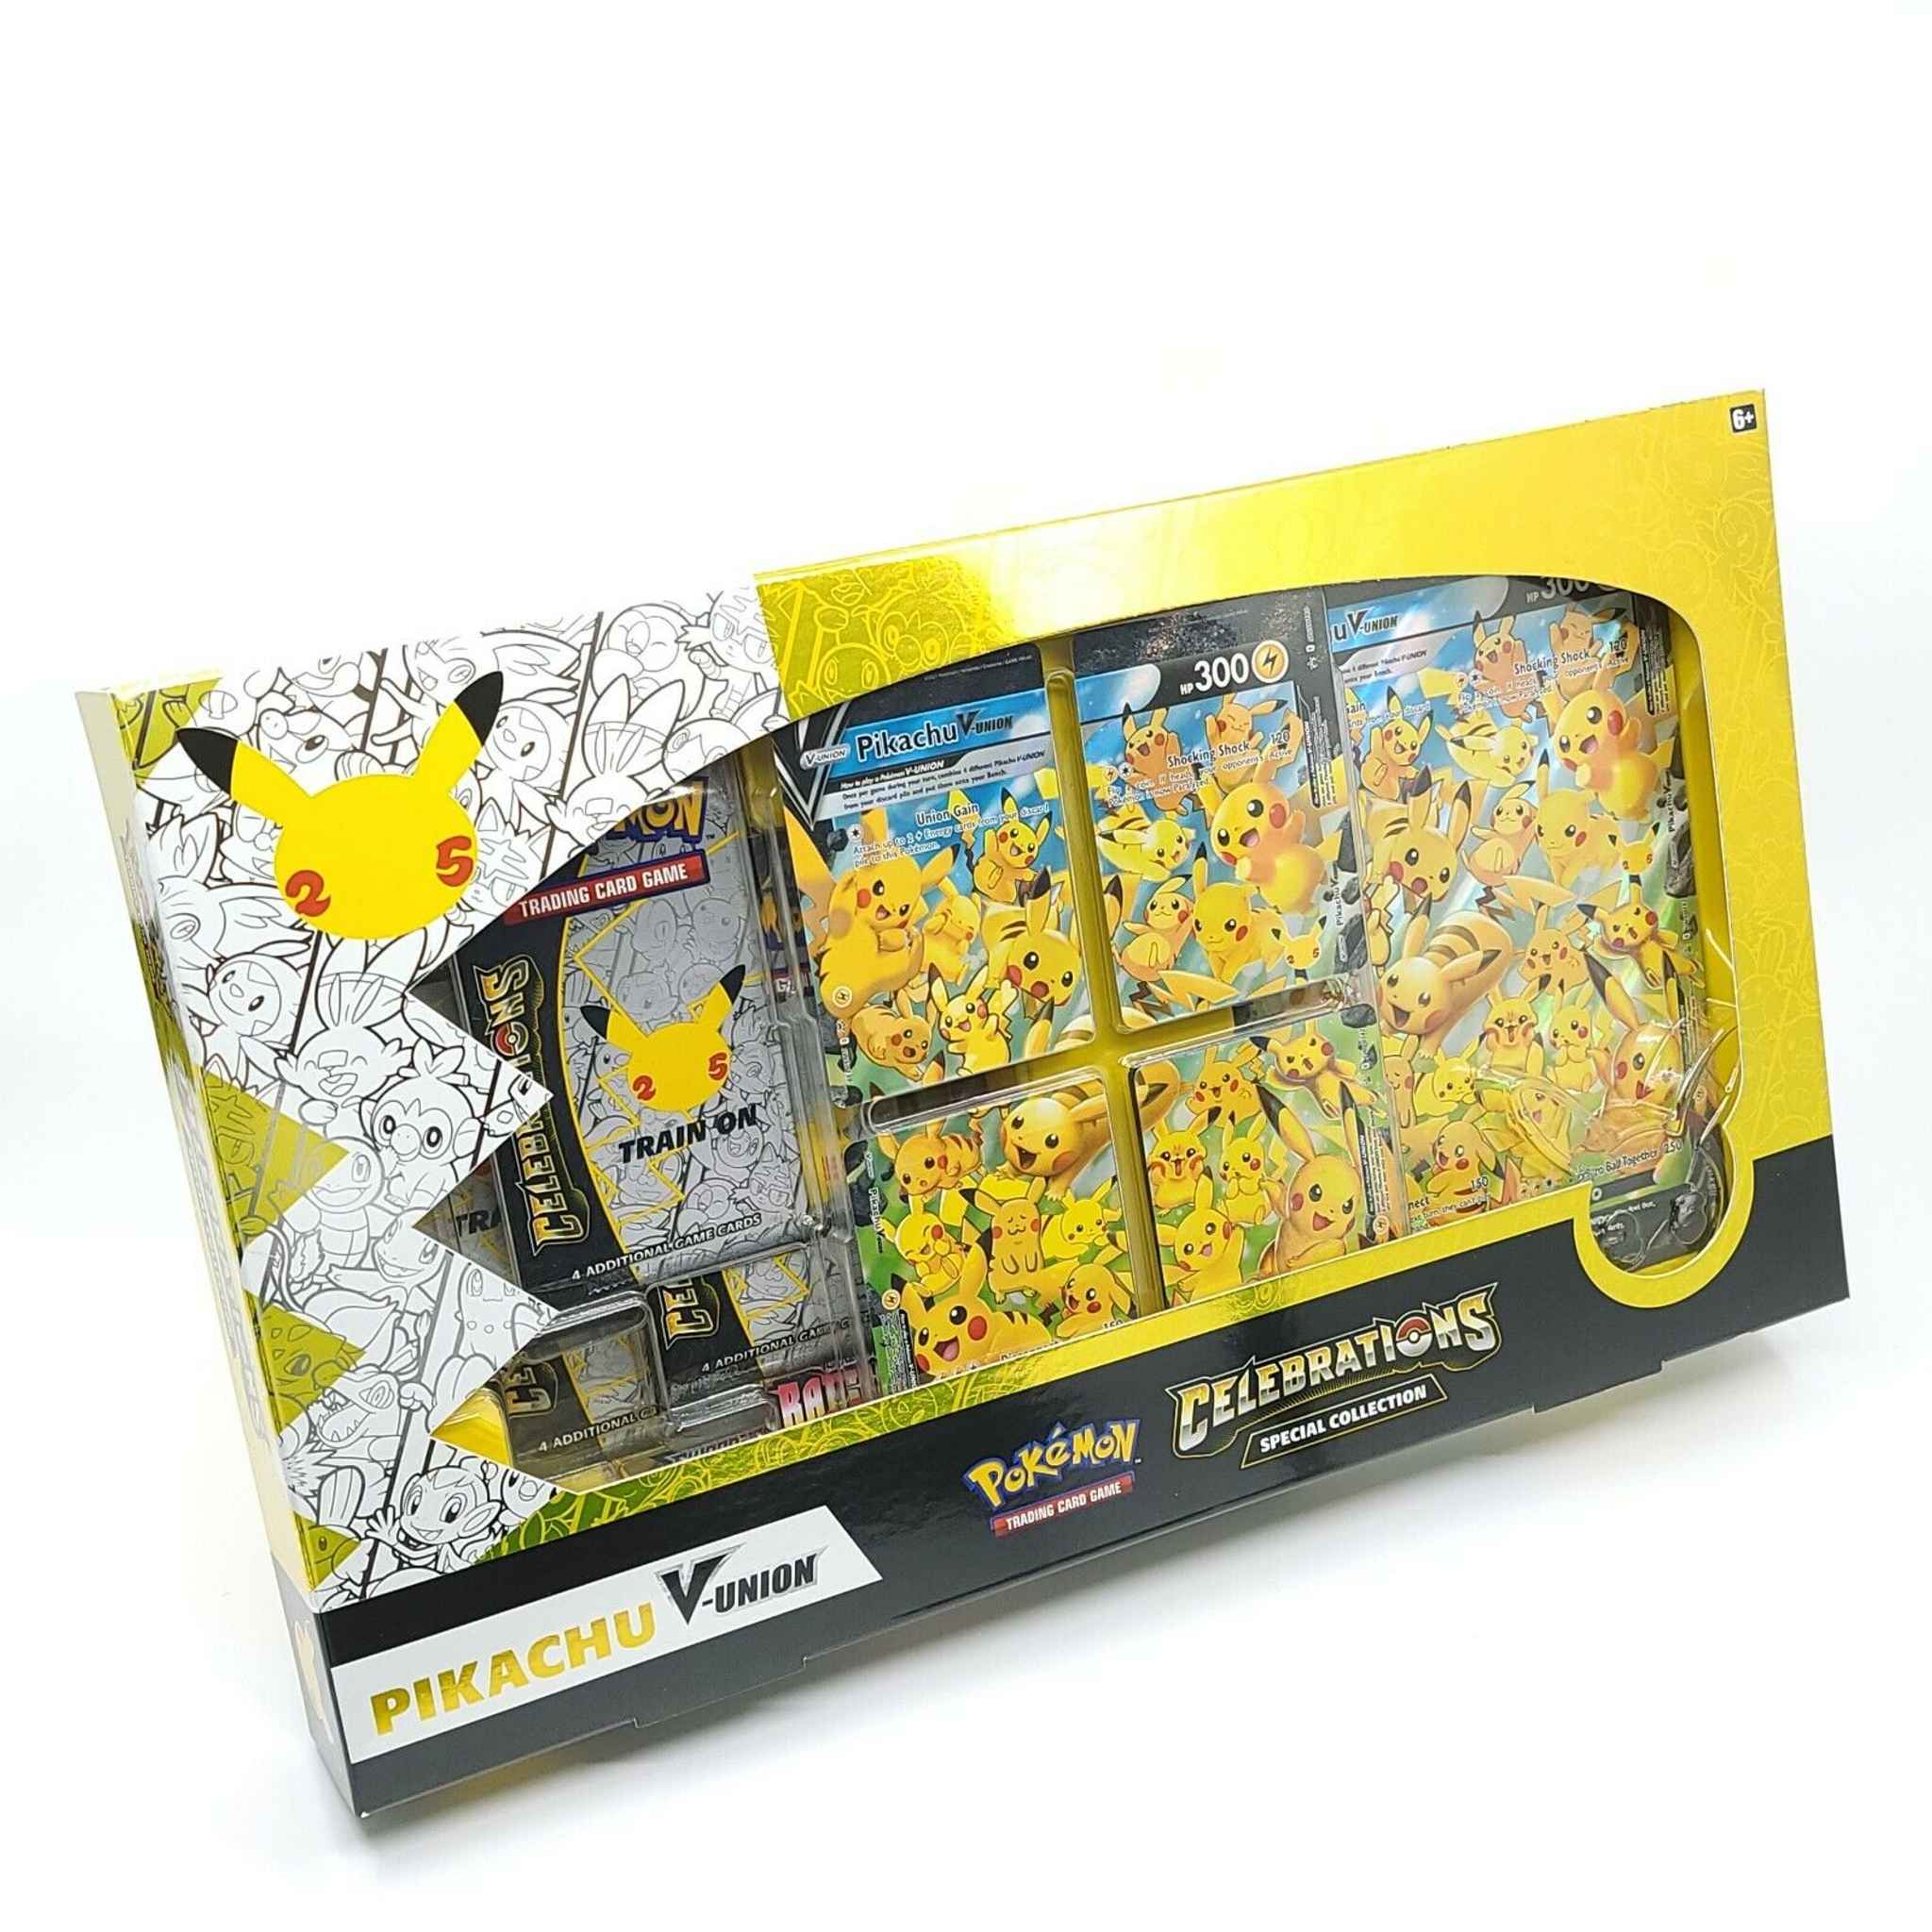 Pikachu V Union Collection Box Pokemon Celebrations New and Sealed 